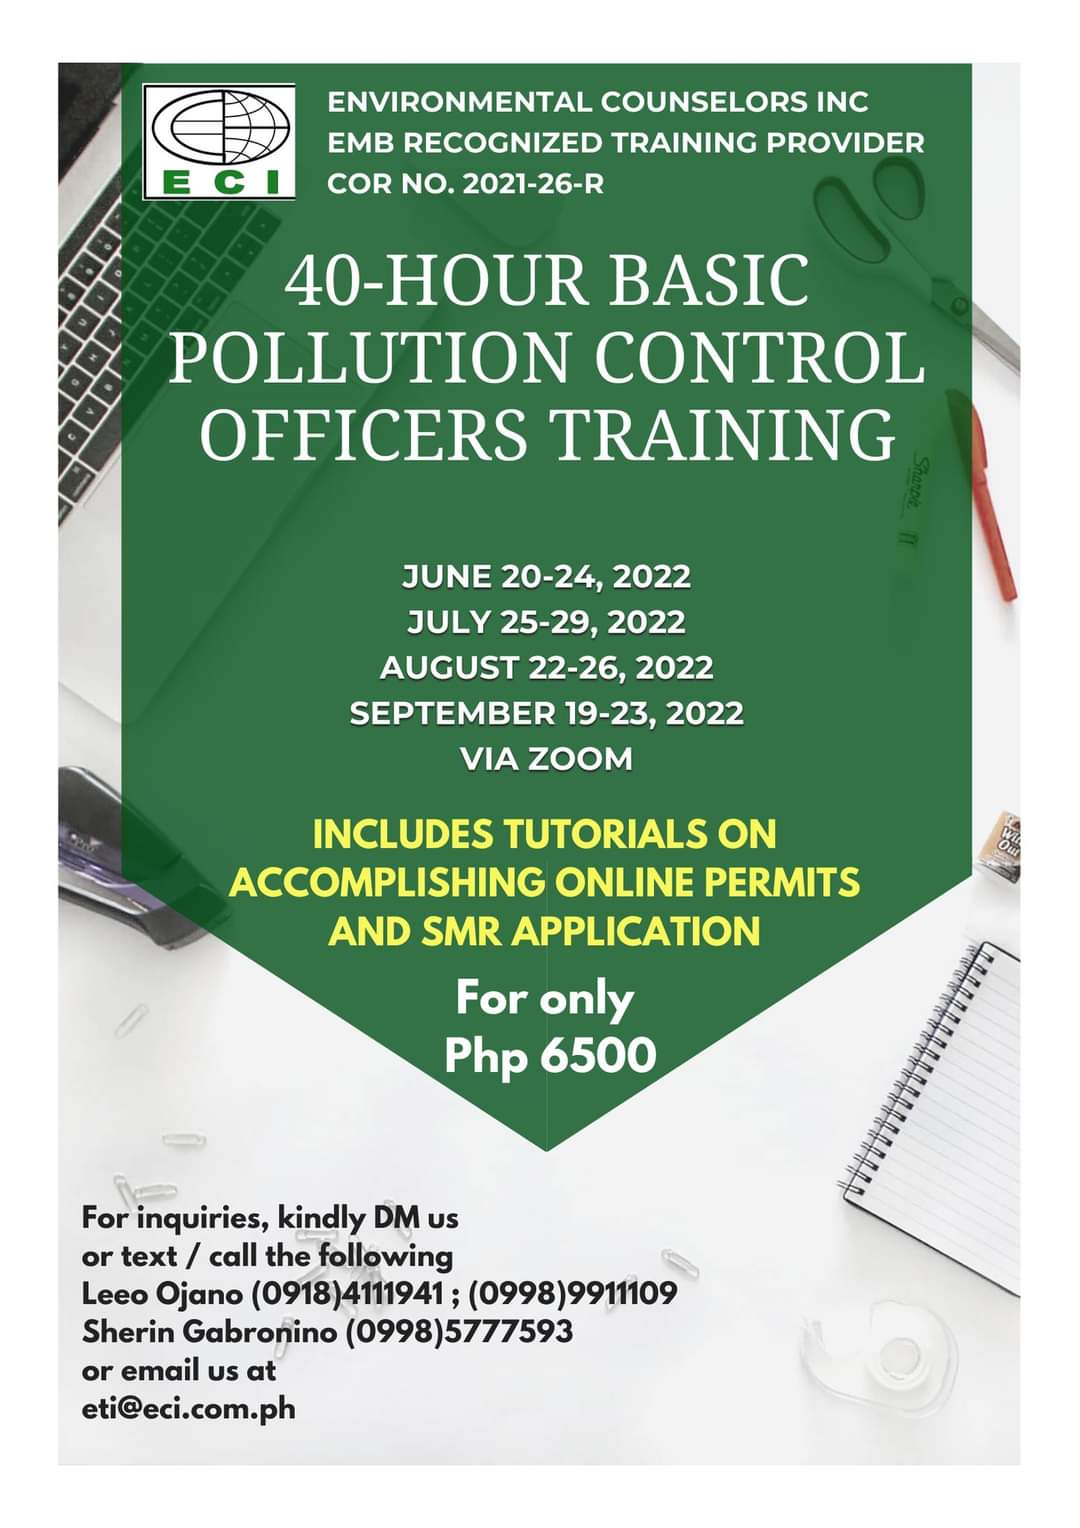 PCO Training Feb 2022 Public Course